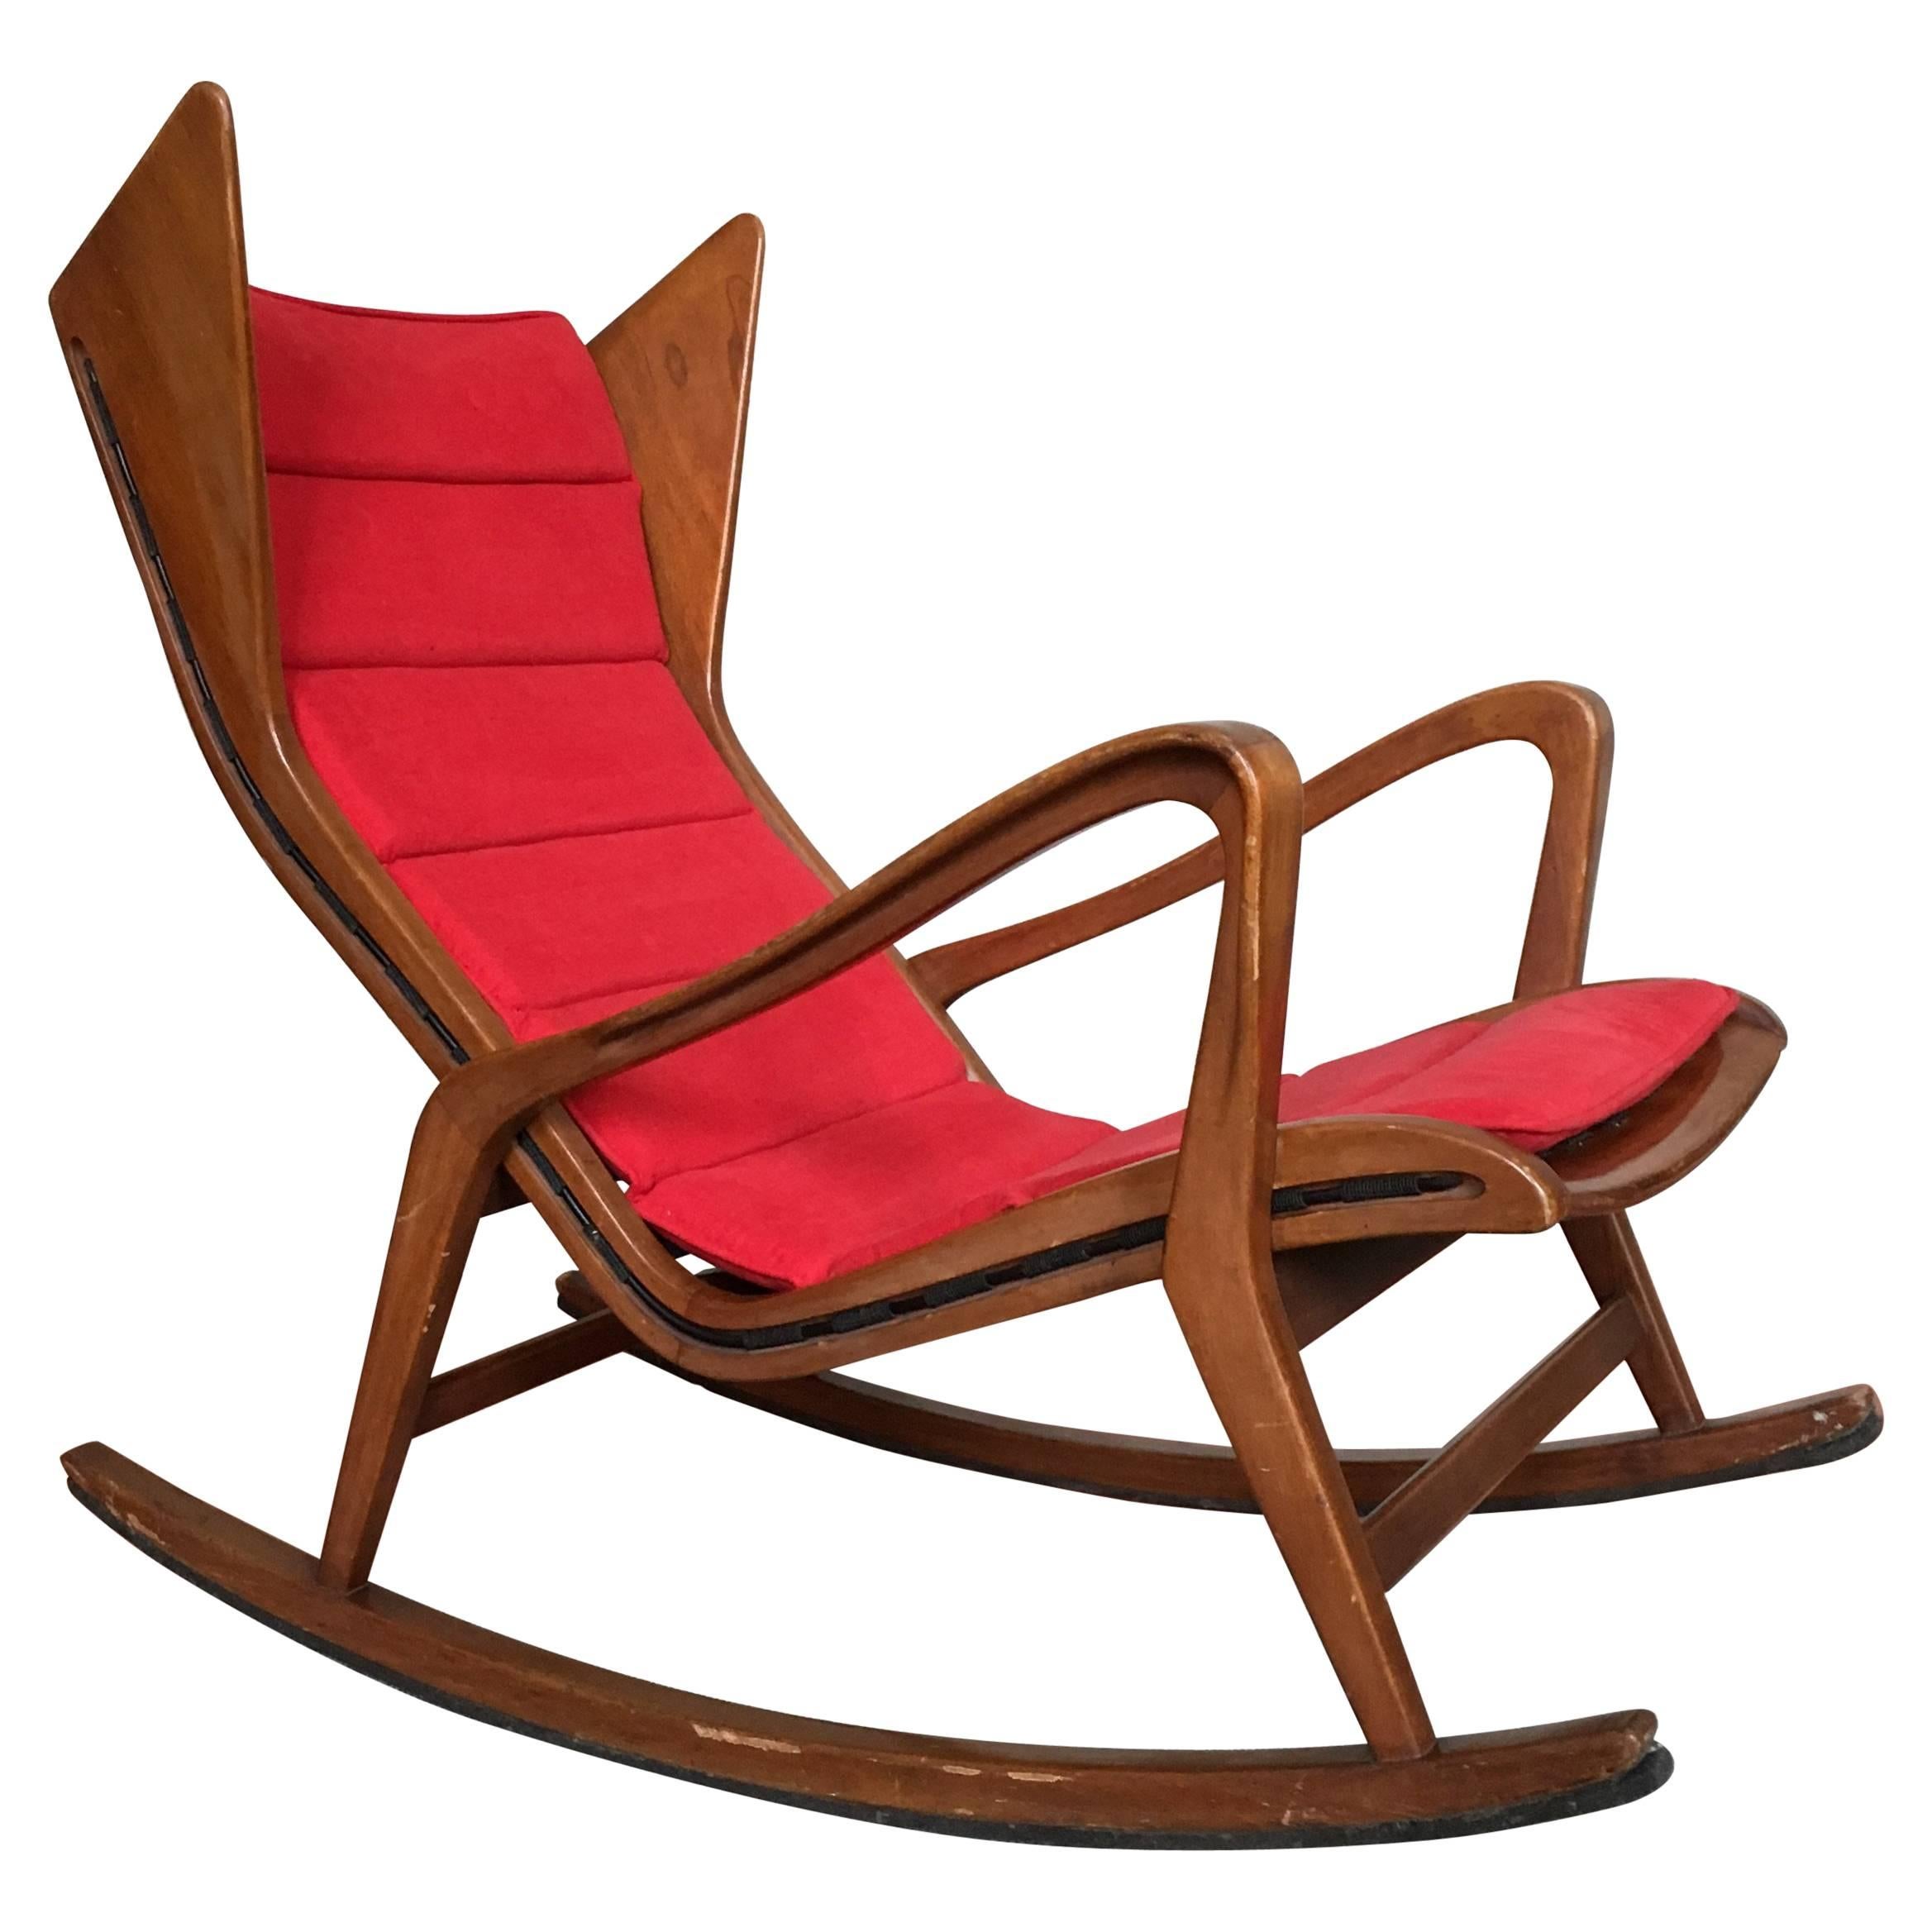 Rare Rocking-Chair Model 572 by the Studio Tecnico Cassina, Italy, 1955